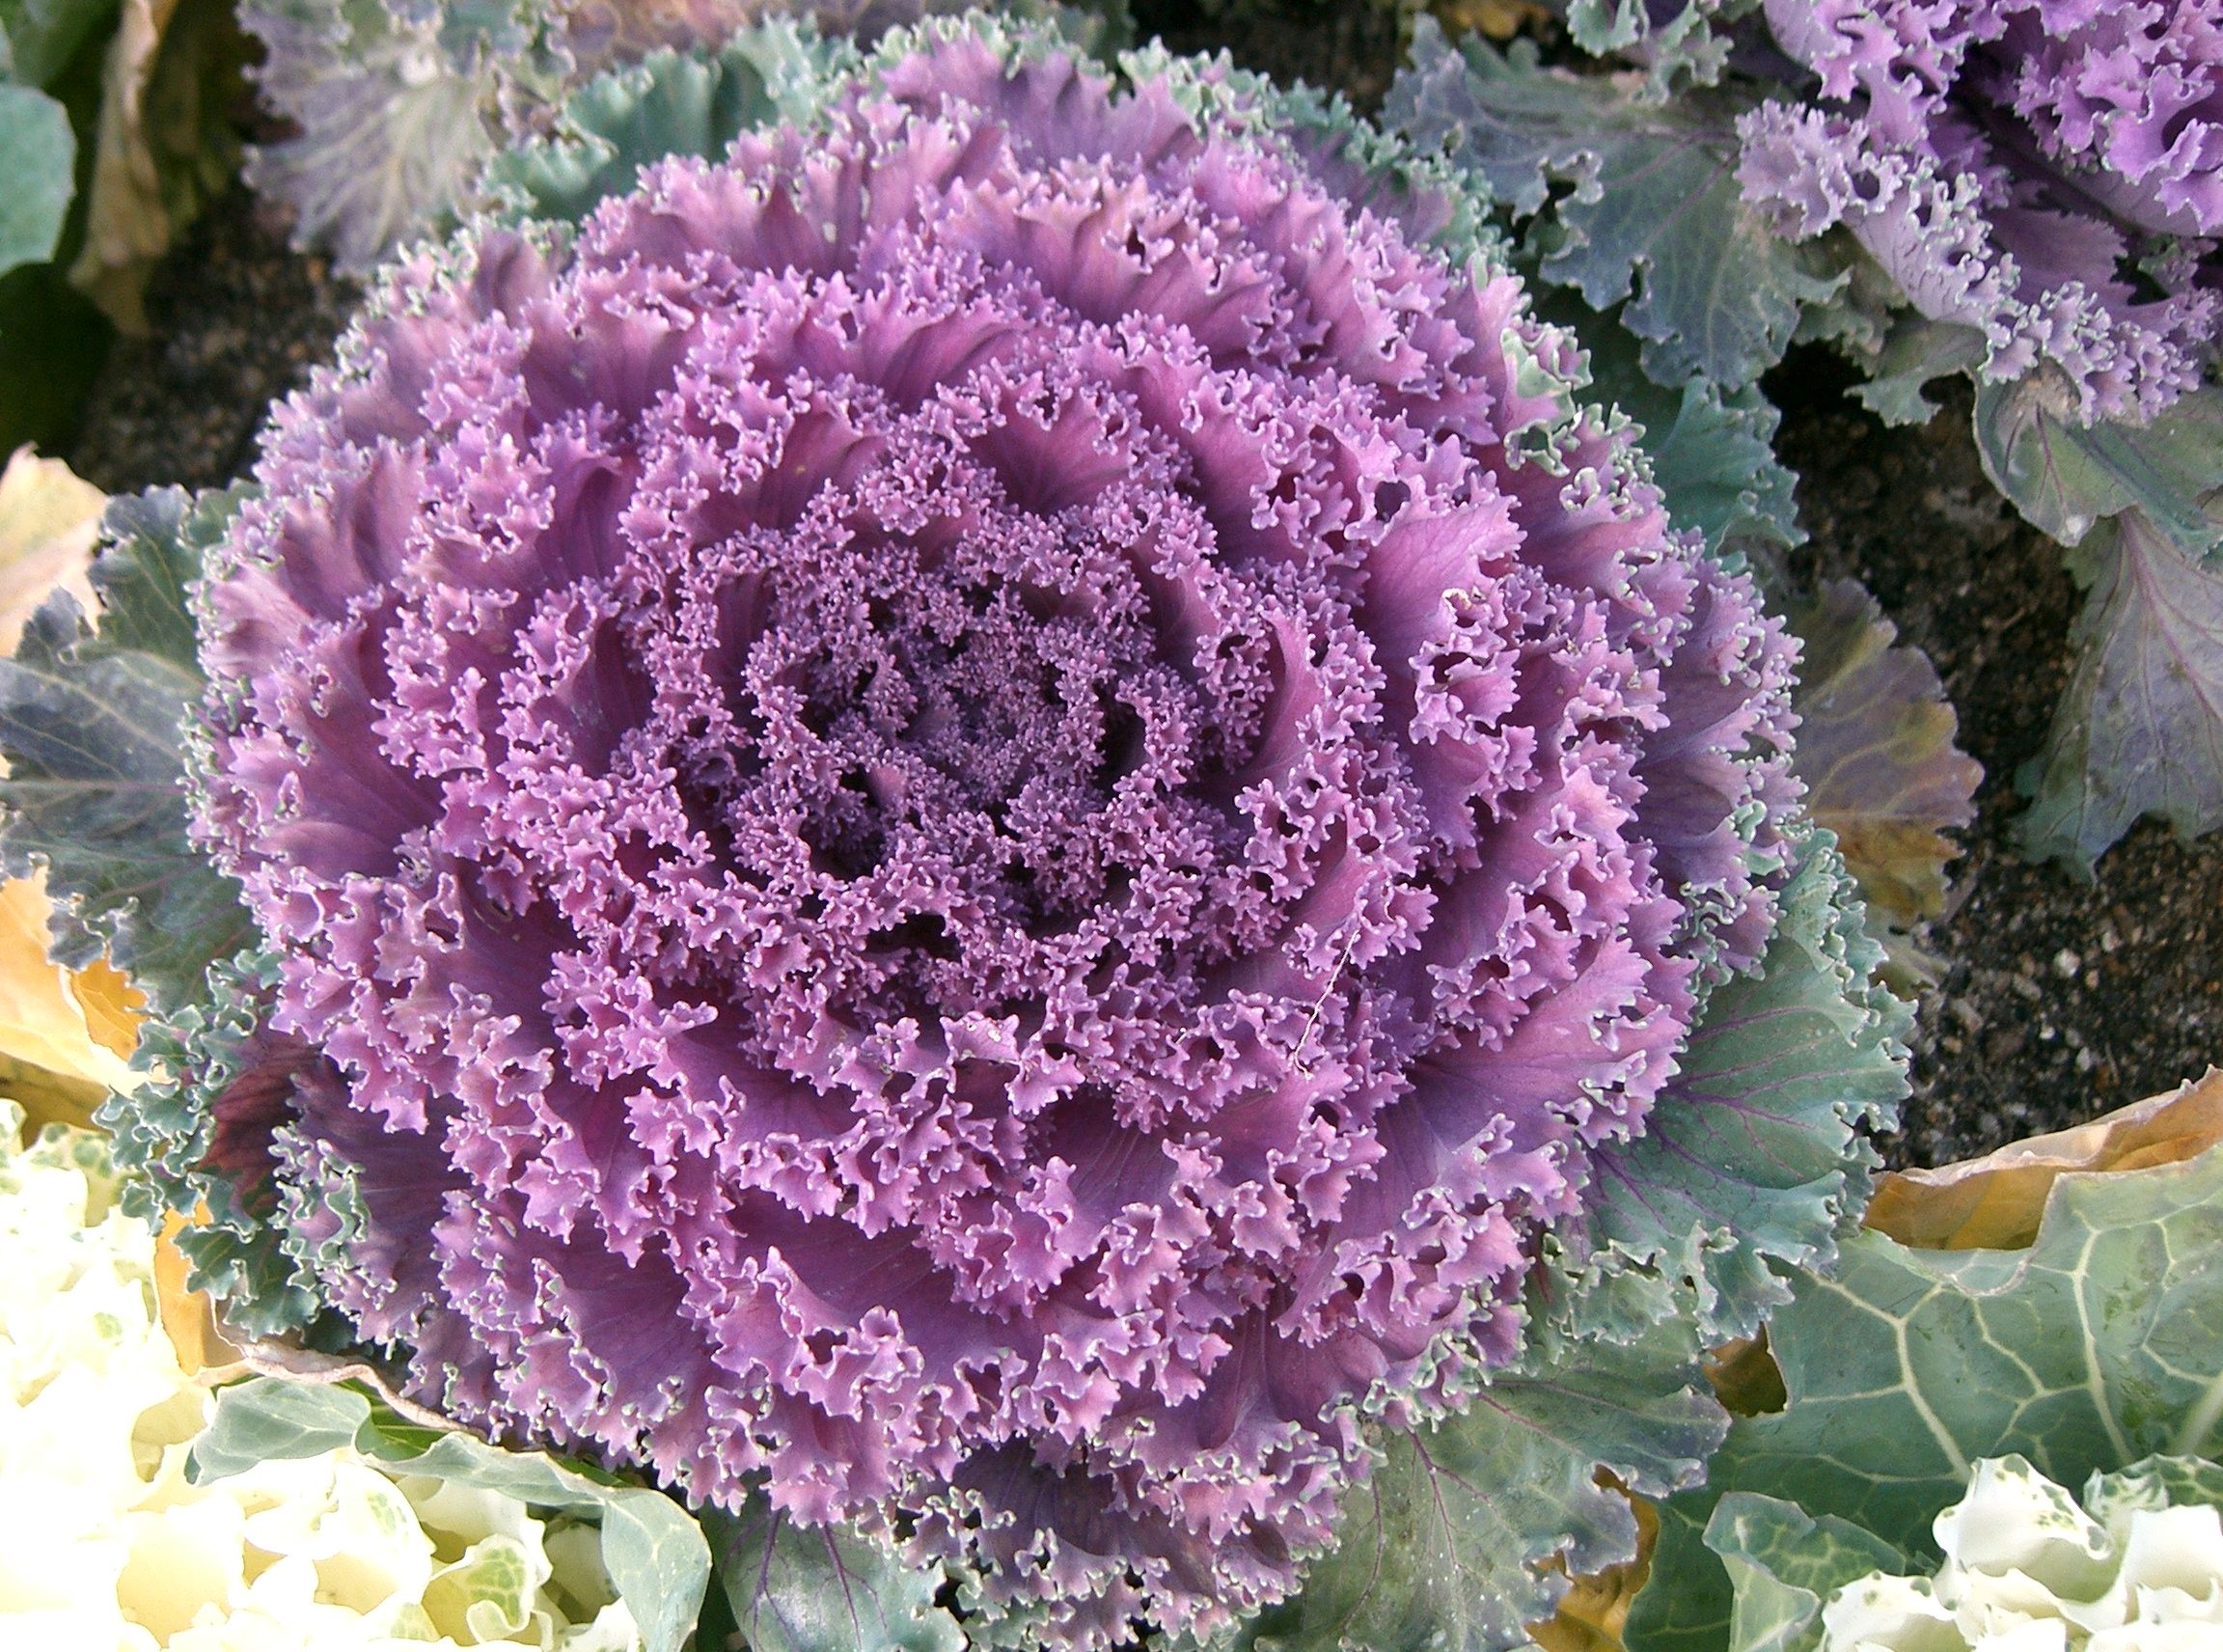 Flowering cabbage5